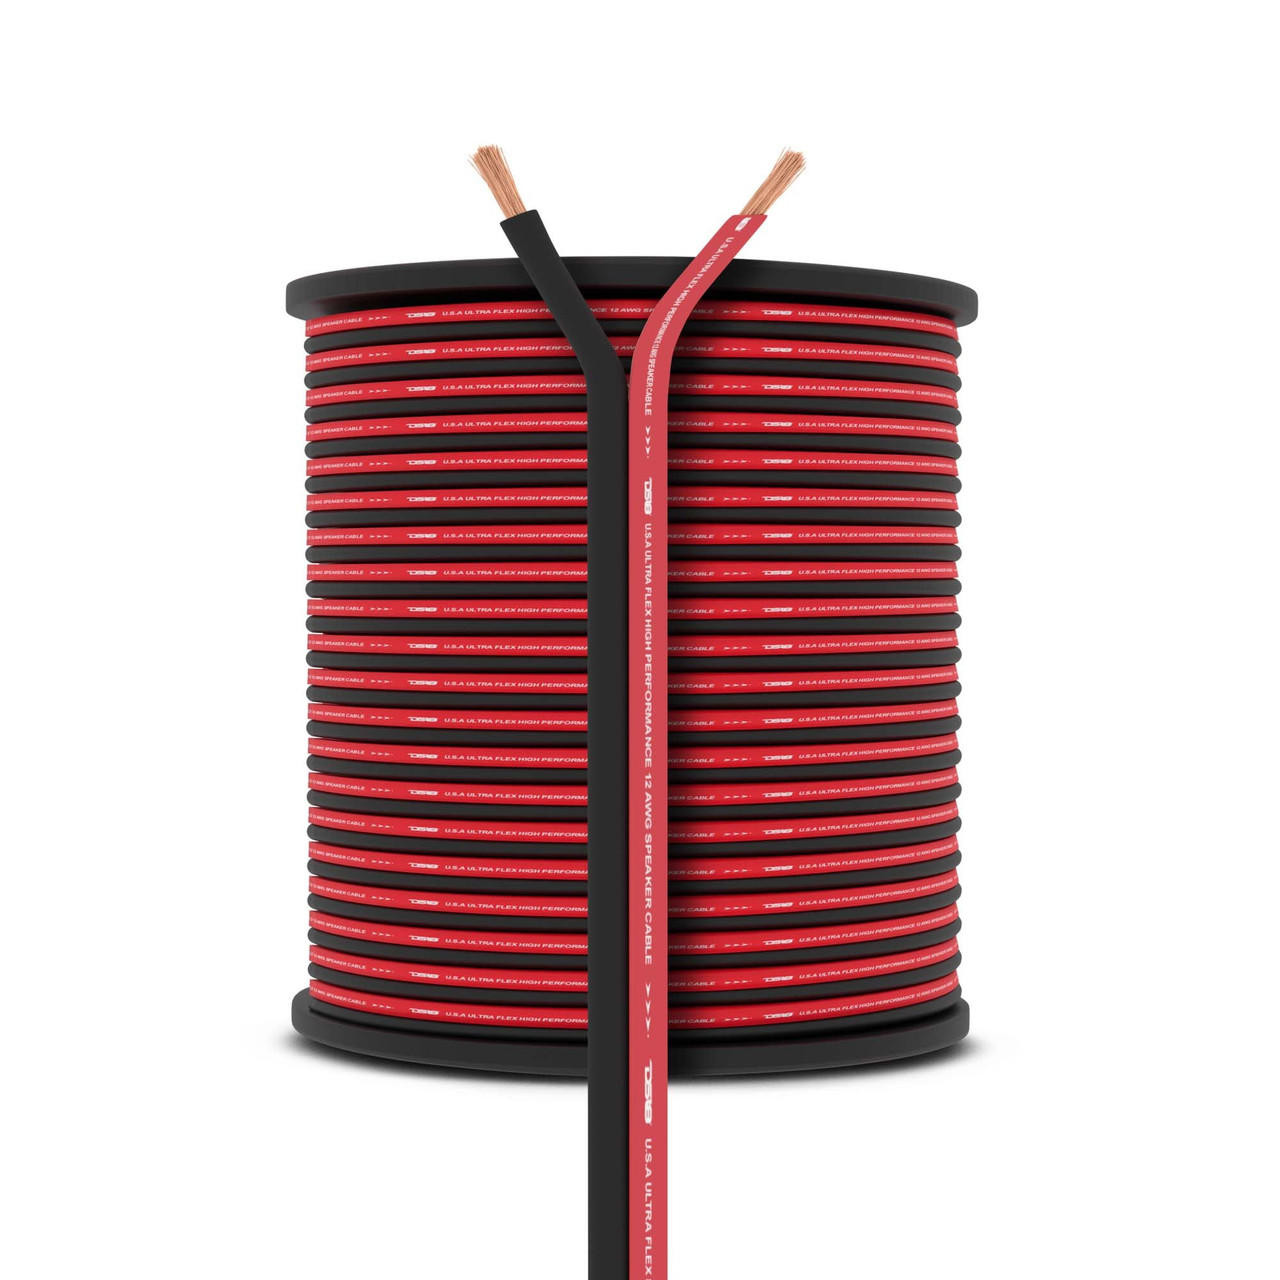 DS18 SW-12GA-500RB 12-GA Speaker Wire 500 Feet Red